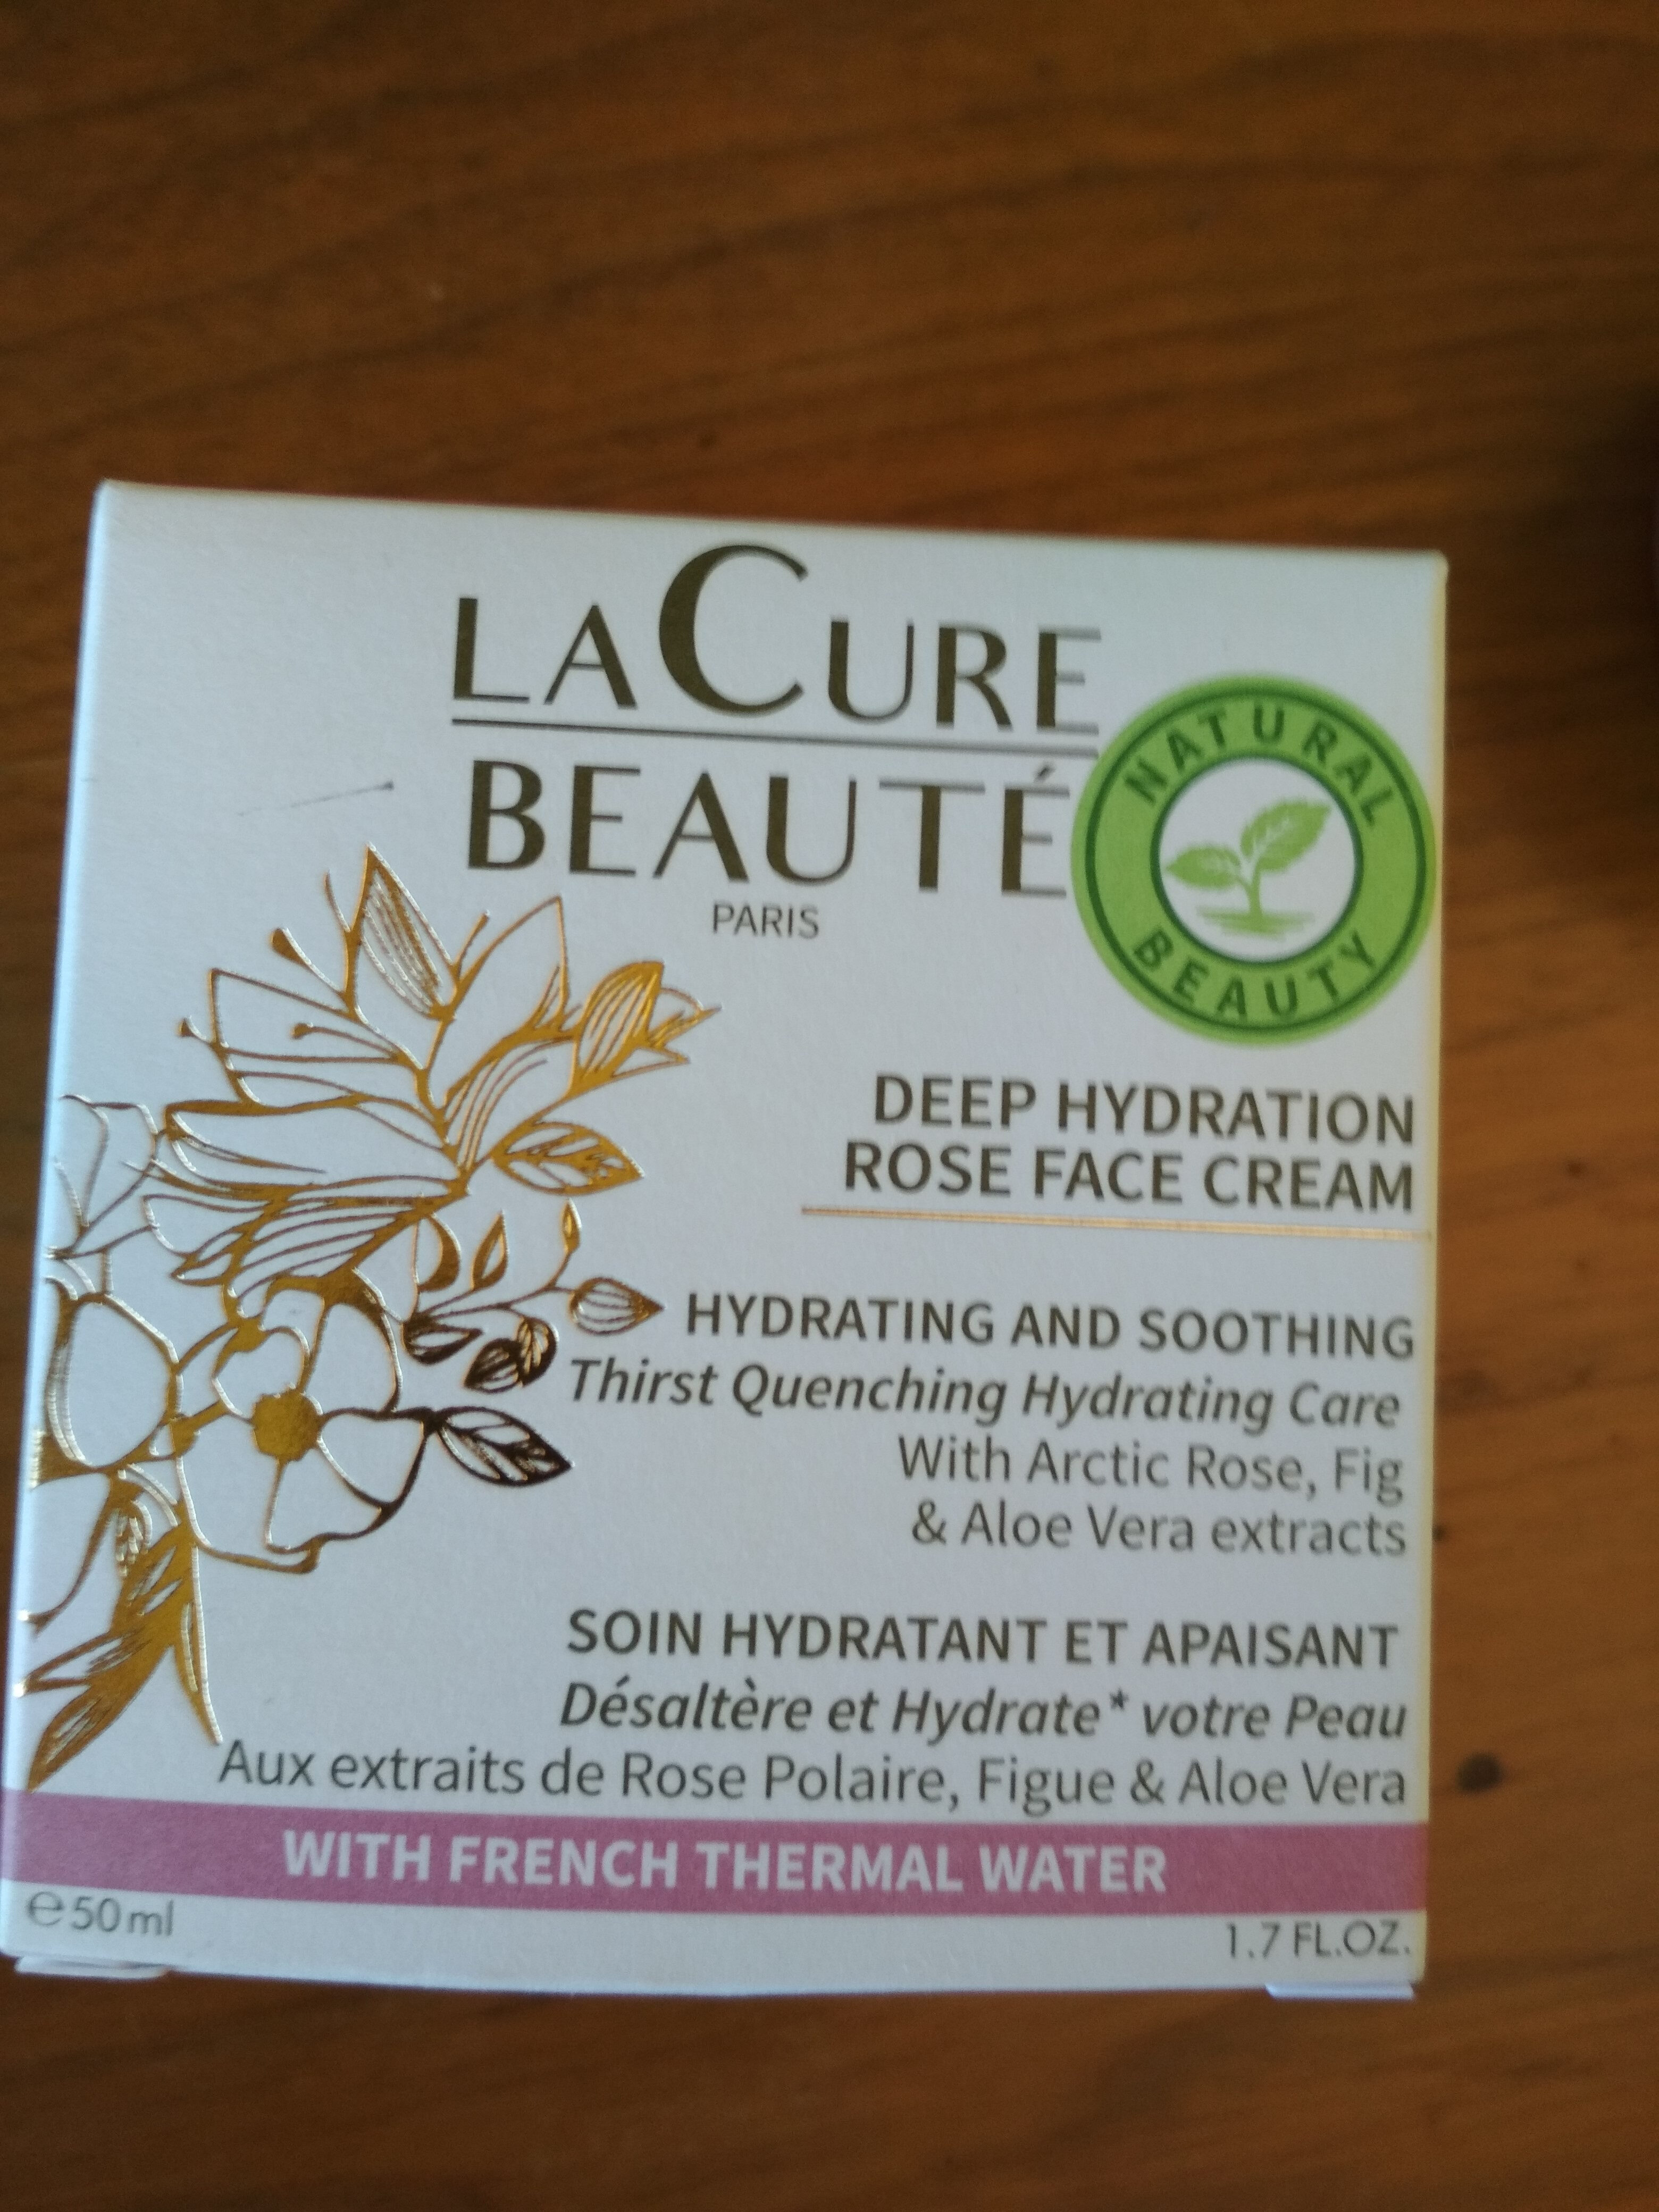 deep hydration rose face cream - Produto - lt